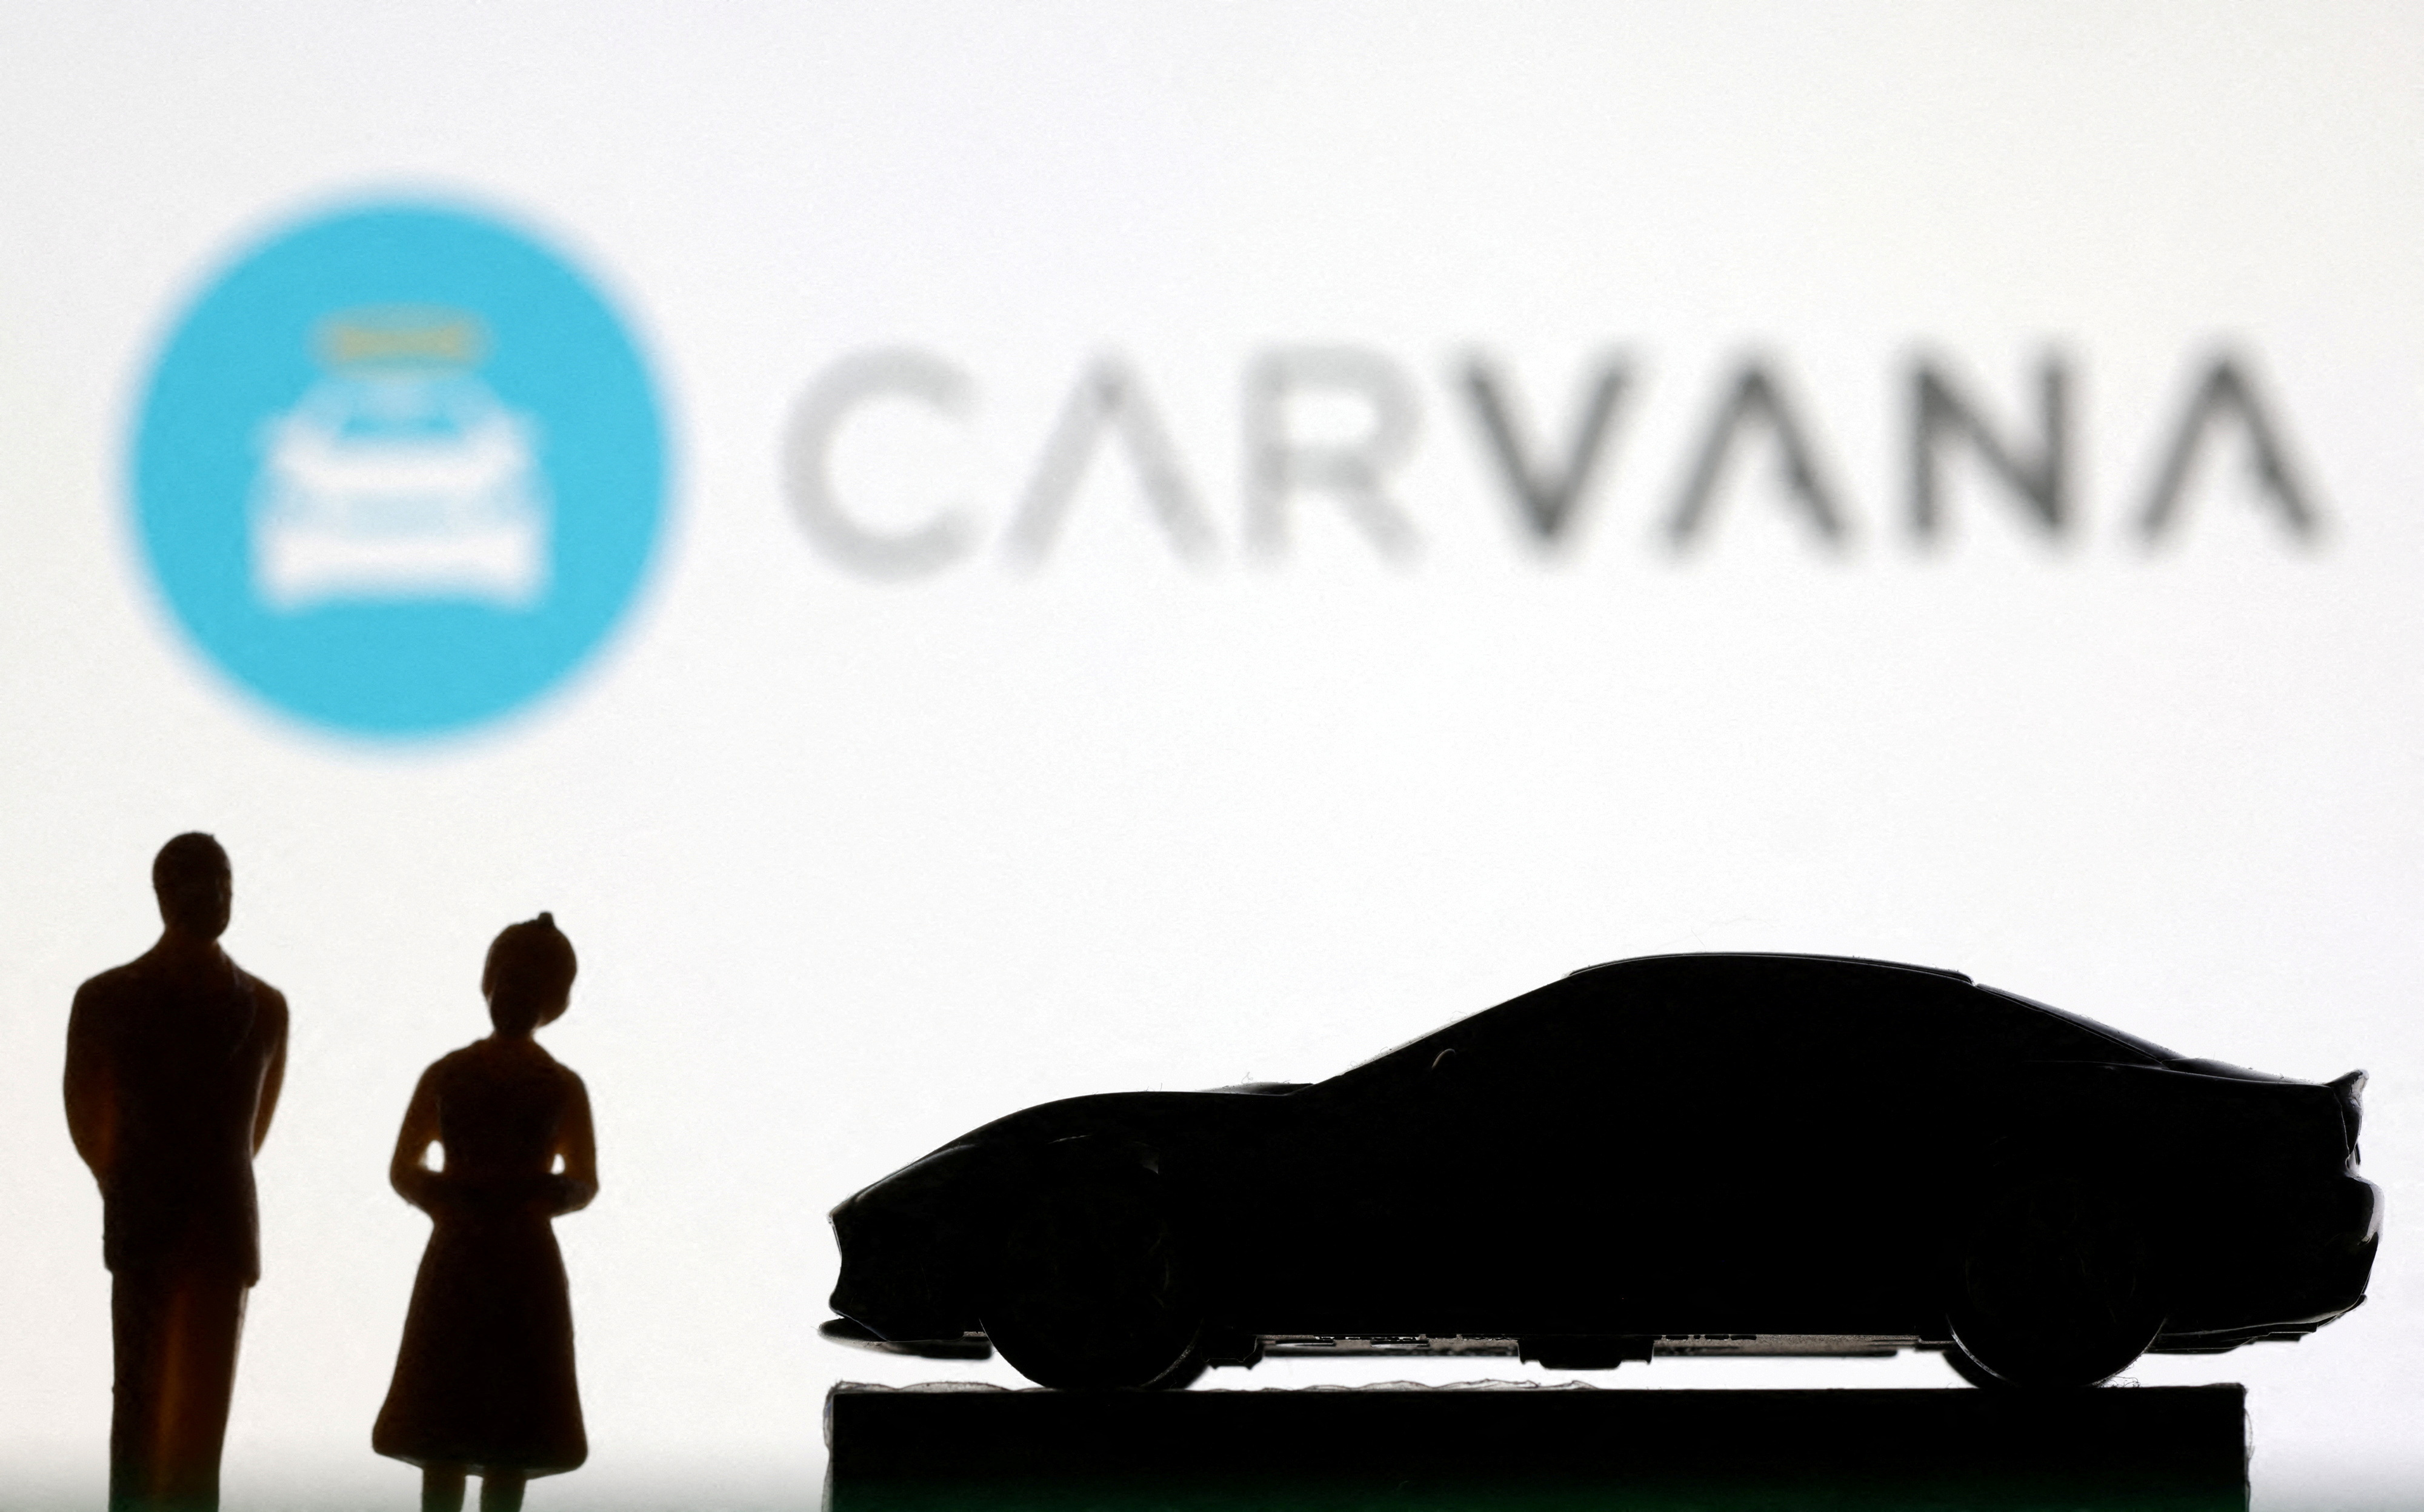 Illustration shows Carvana logo